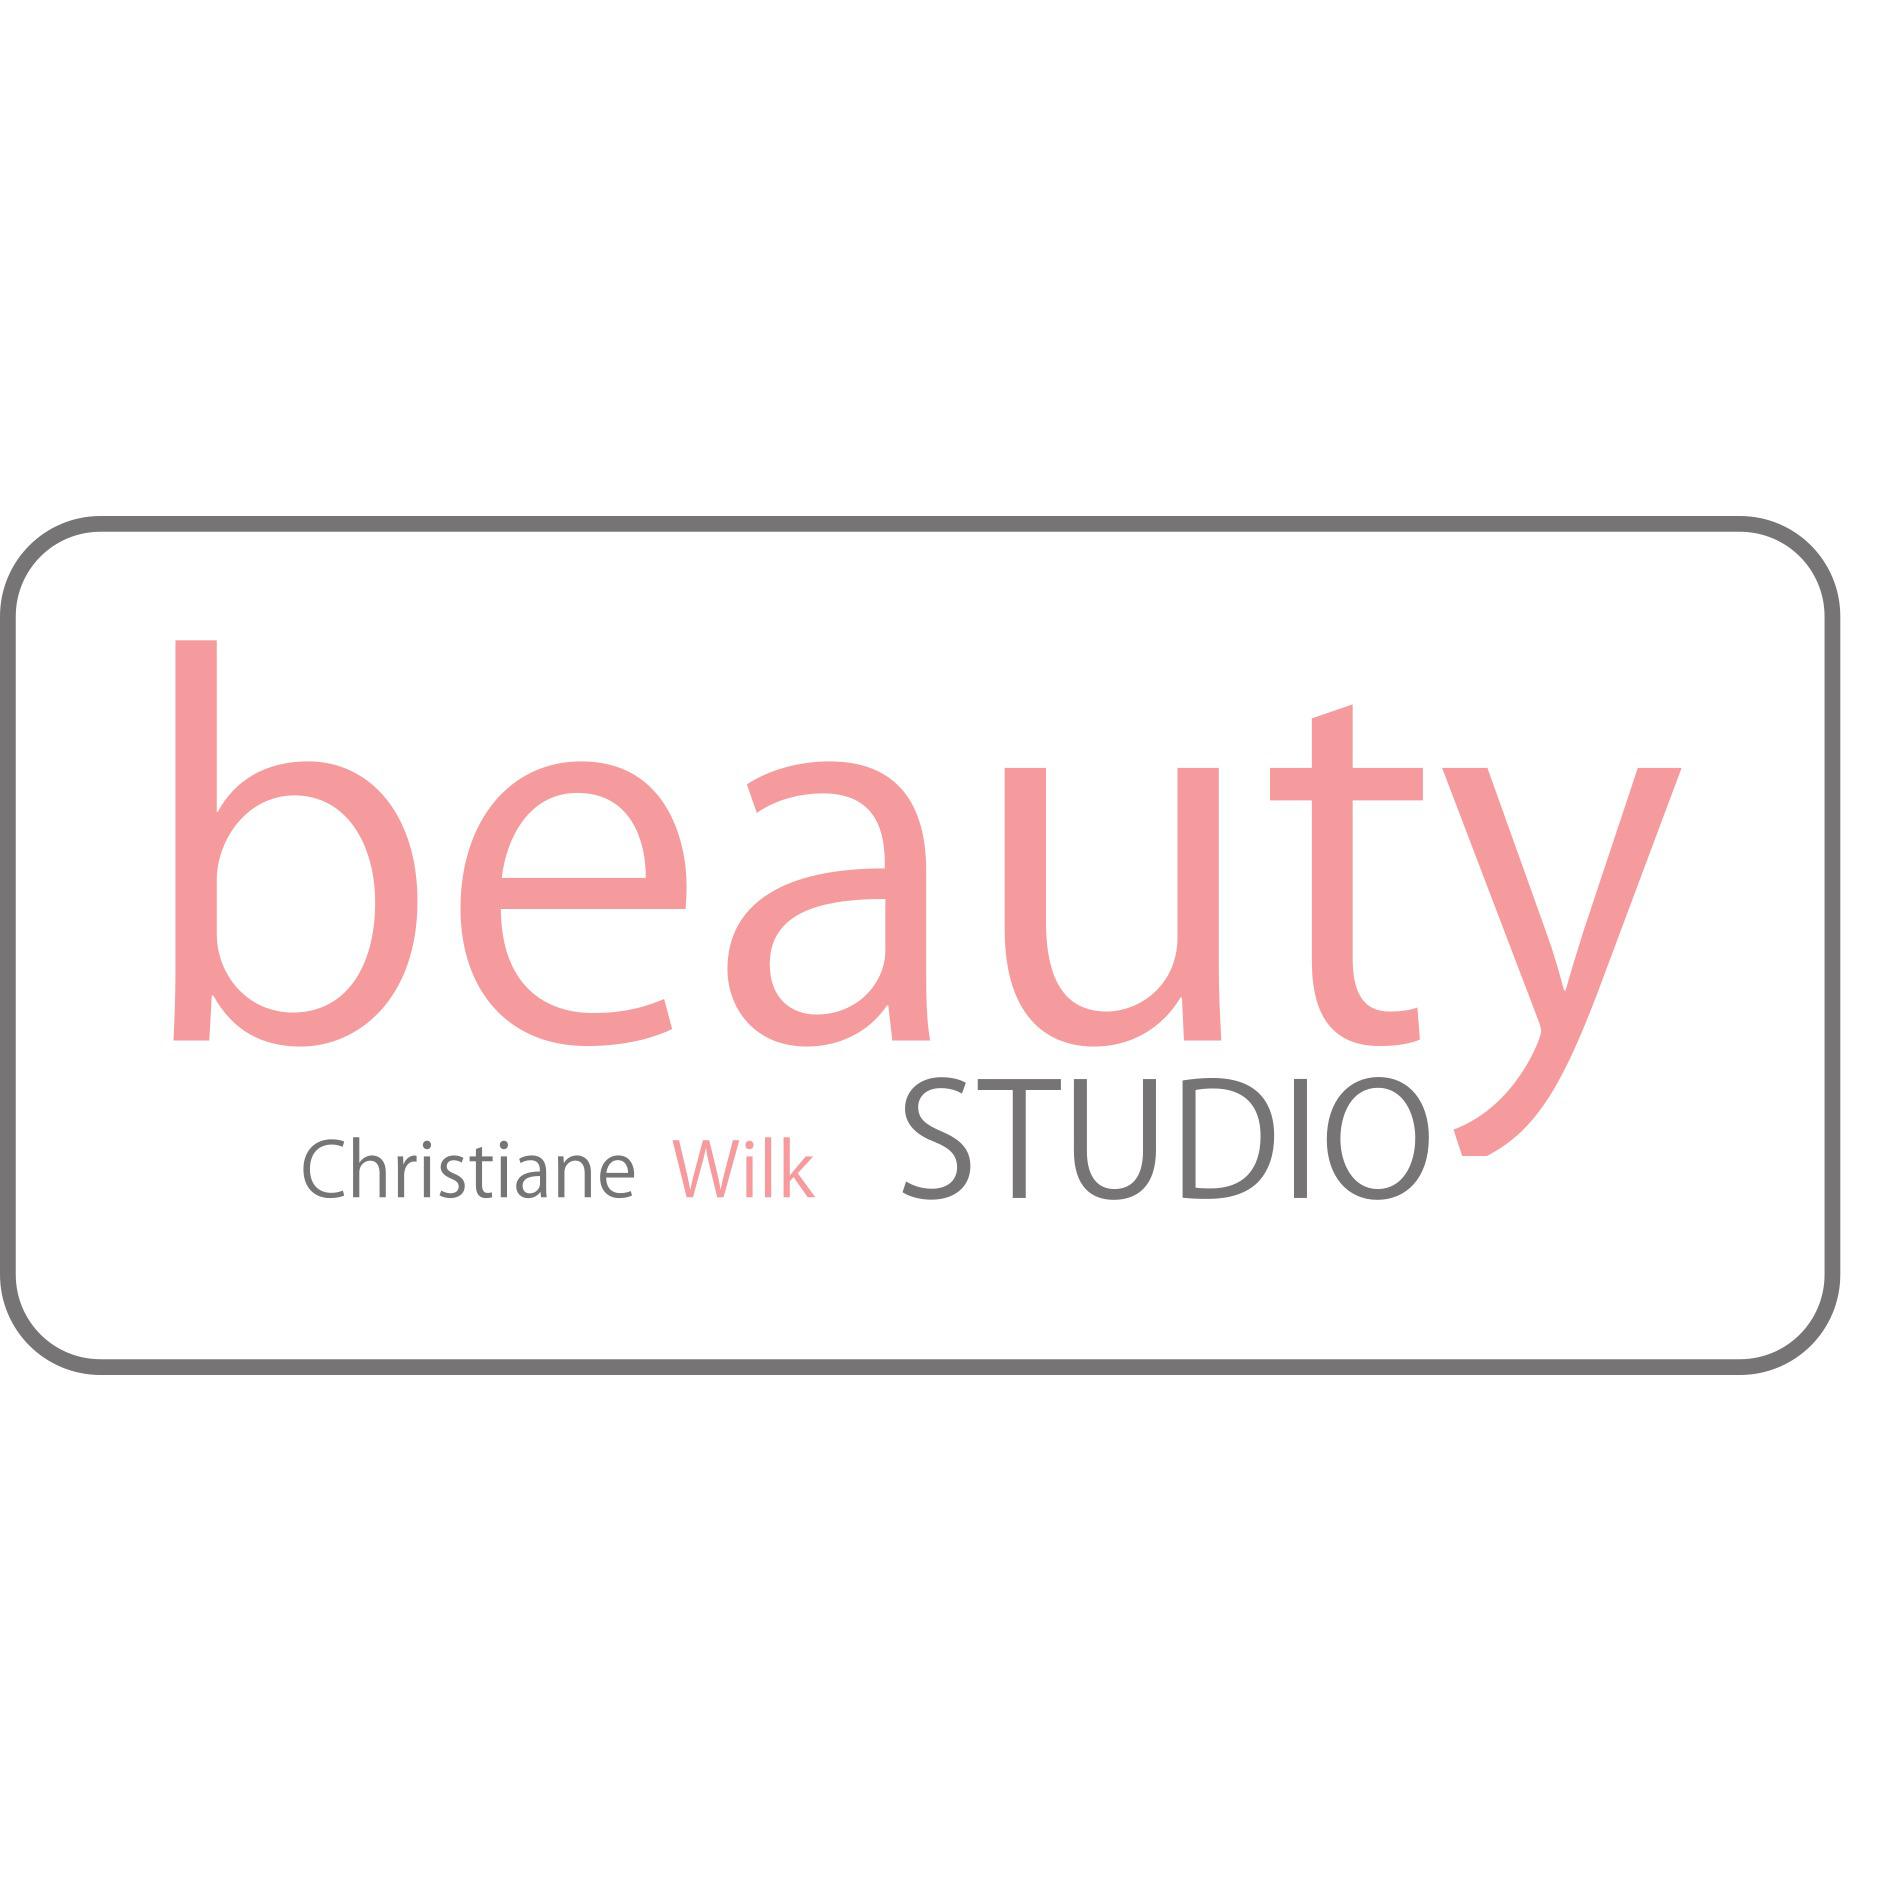 Beauty Studio Christiane Wilk in Hannover - Logo